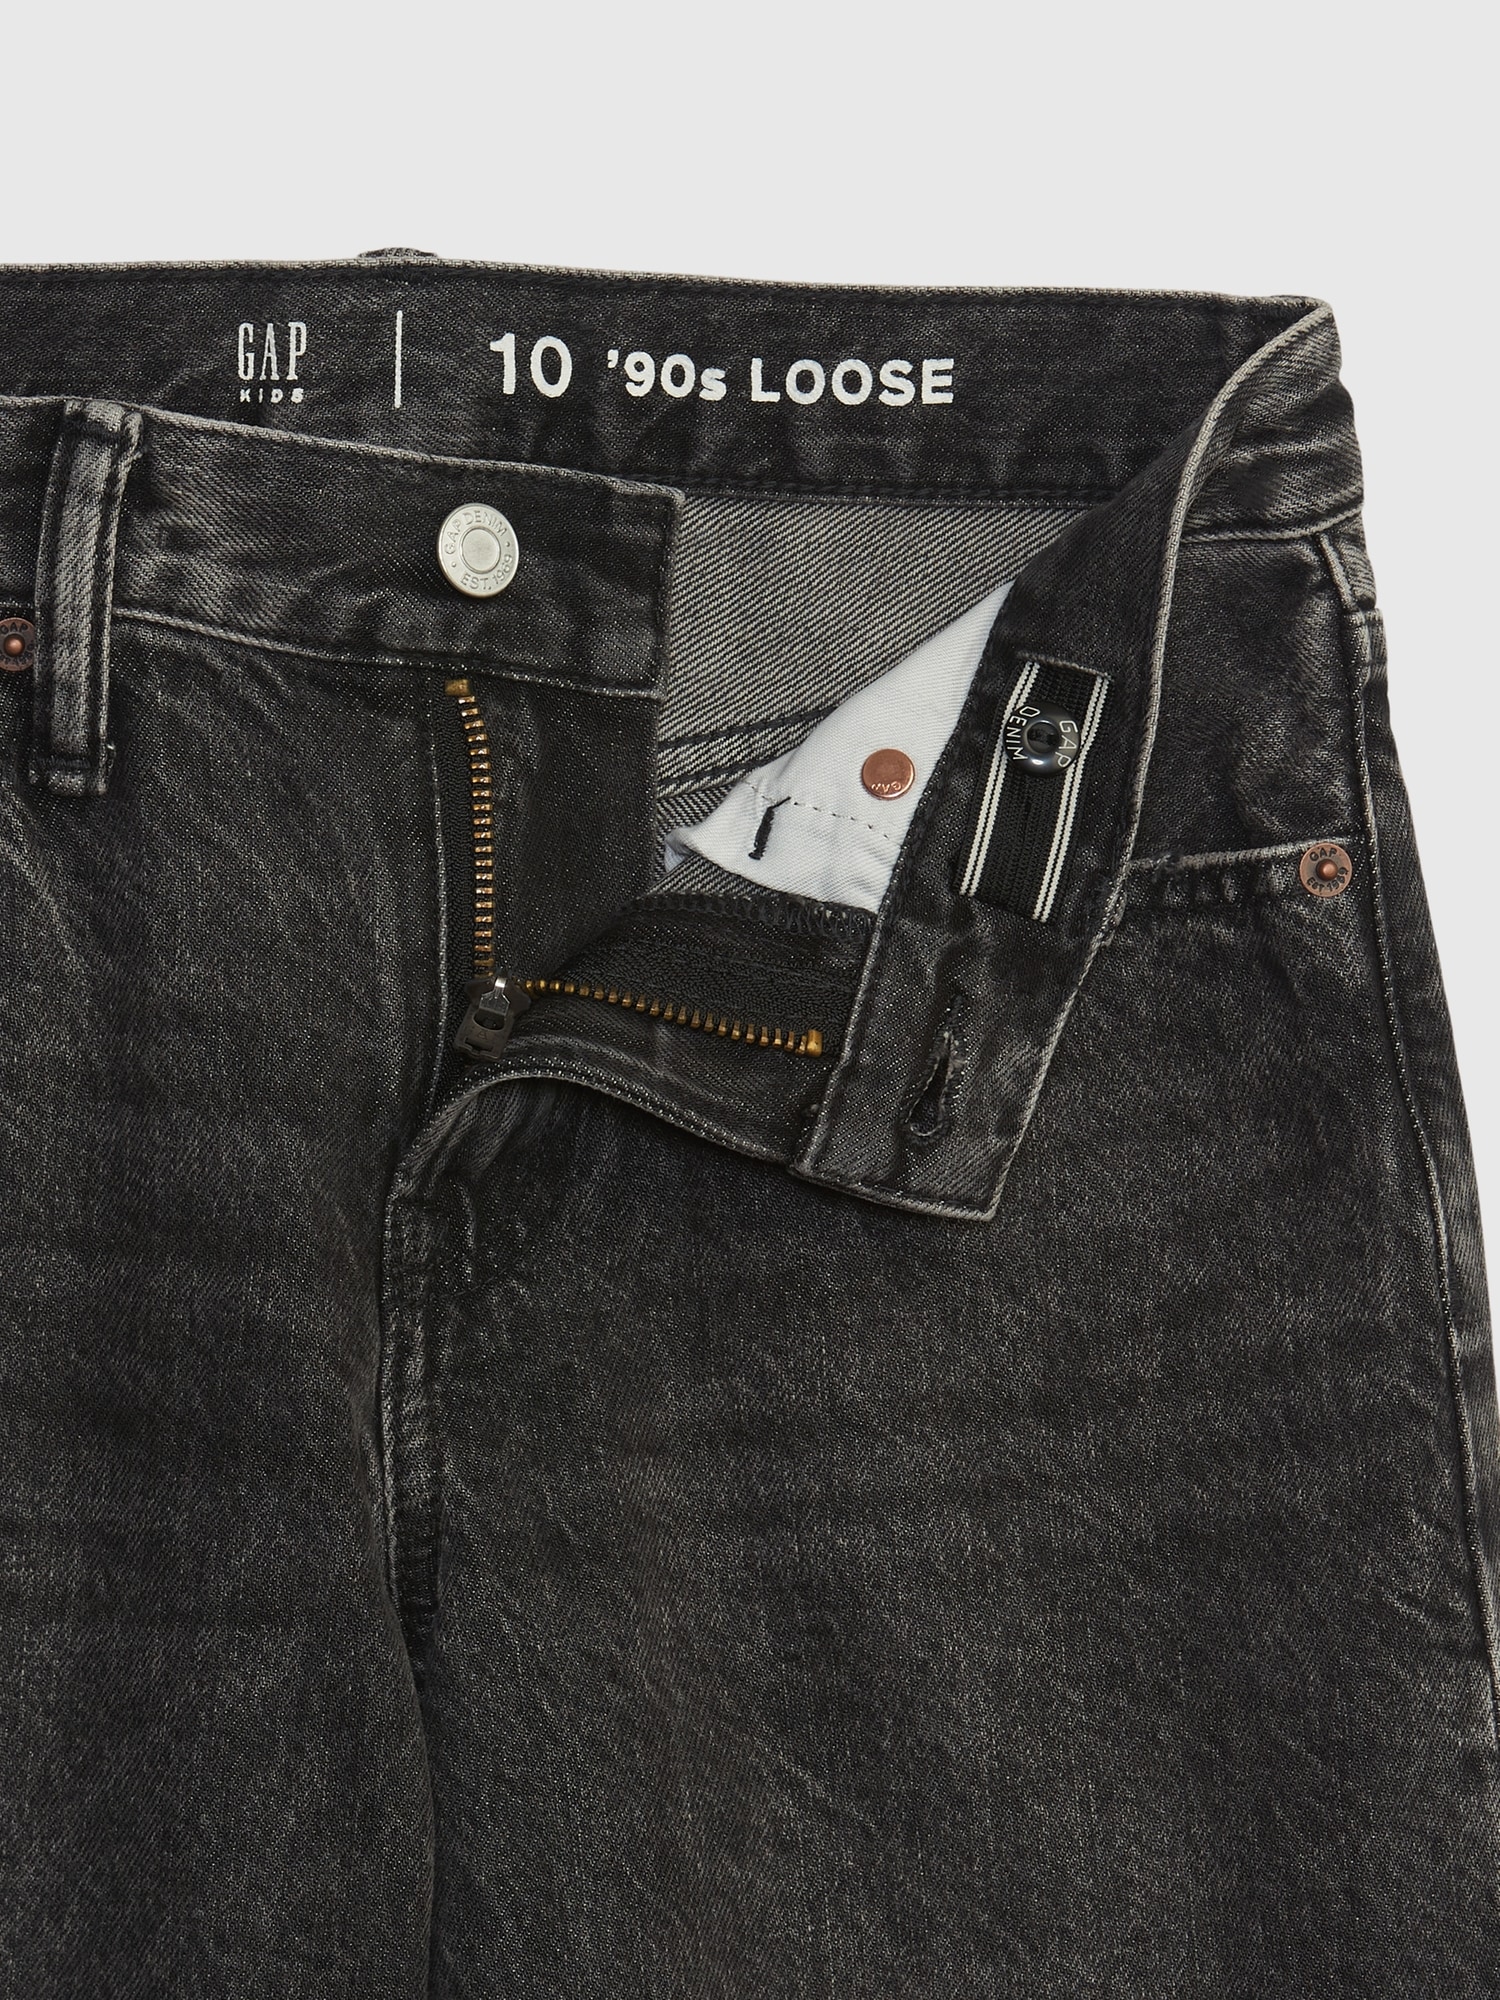 Gap | Loose Kids Jeans Organic \'90s Cotton